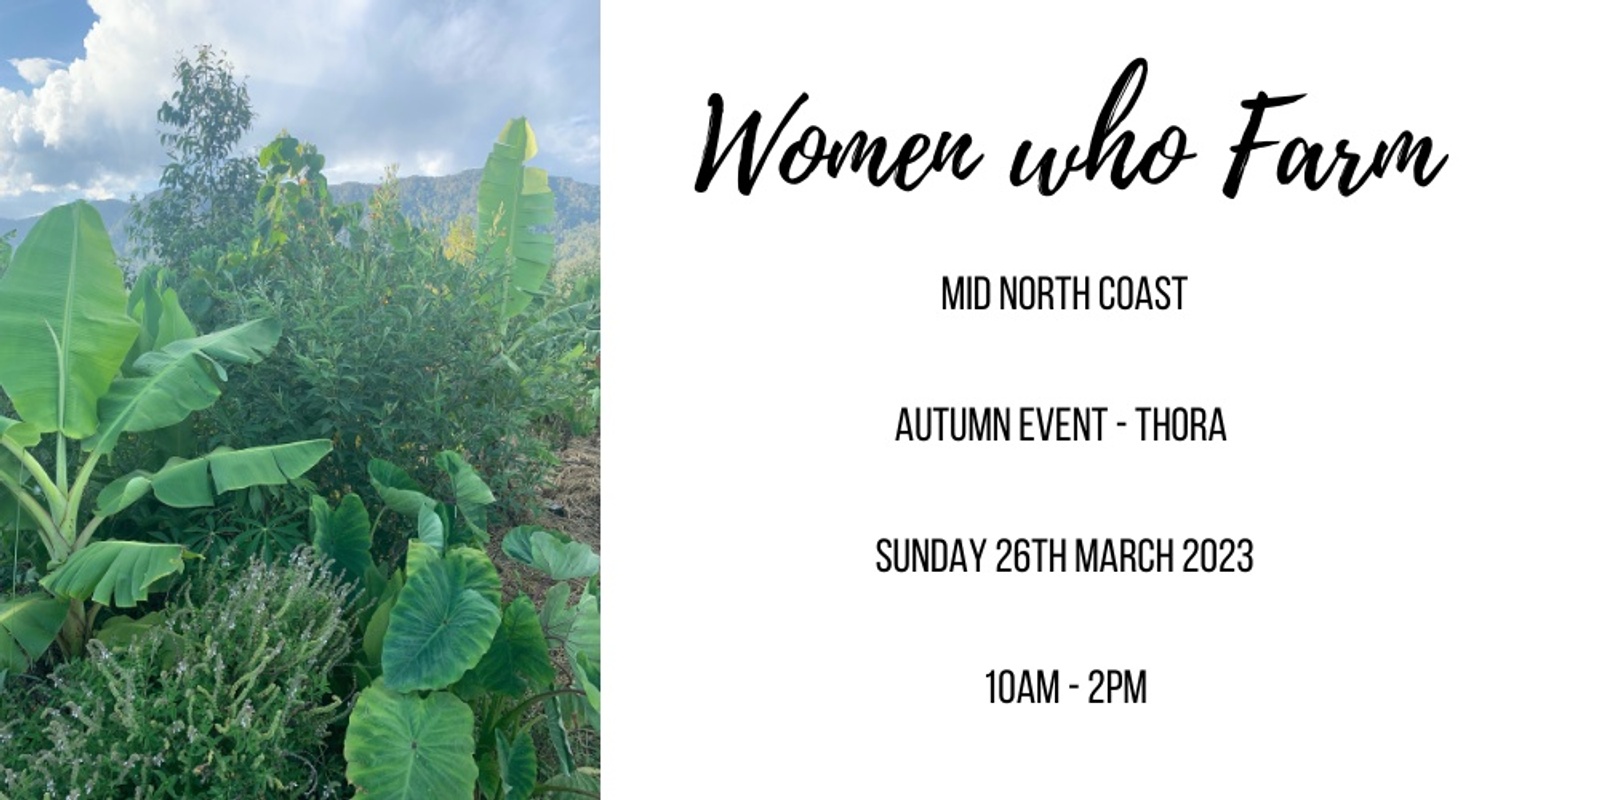 Women who Farm event - Autumn 2023 - mid north coast